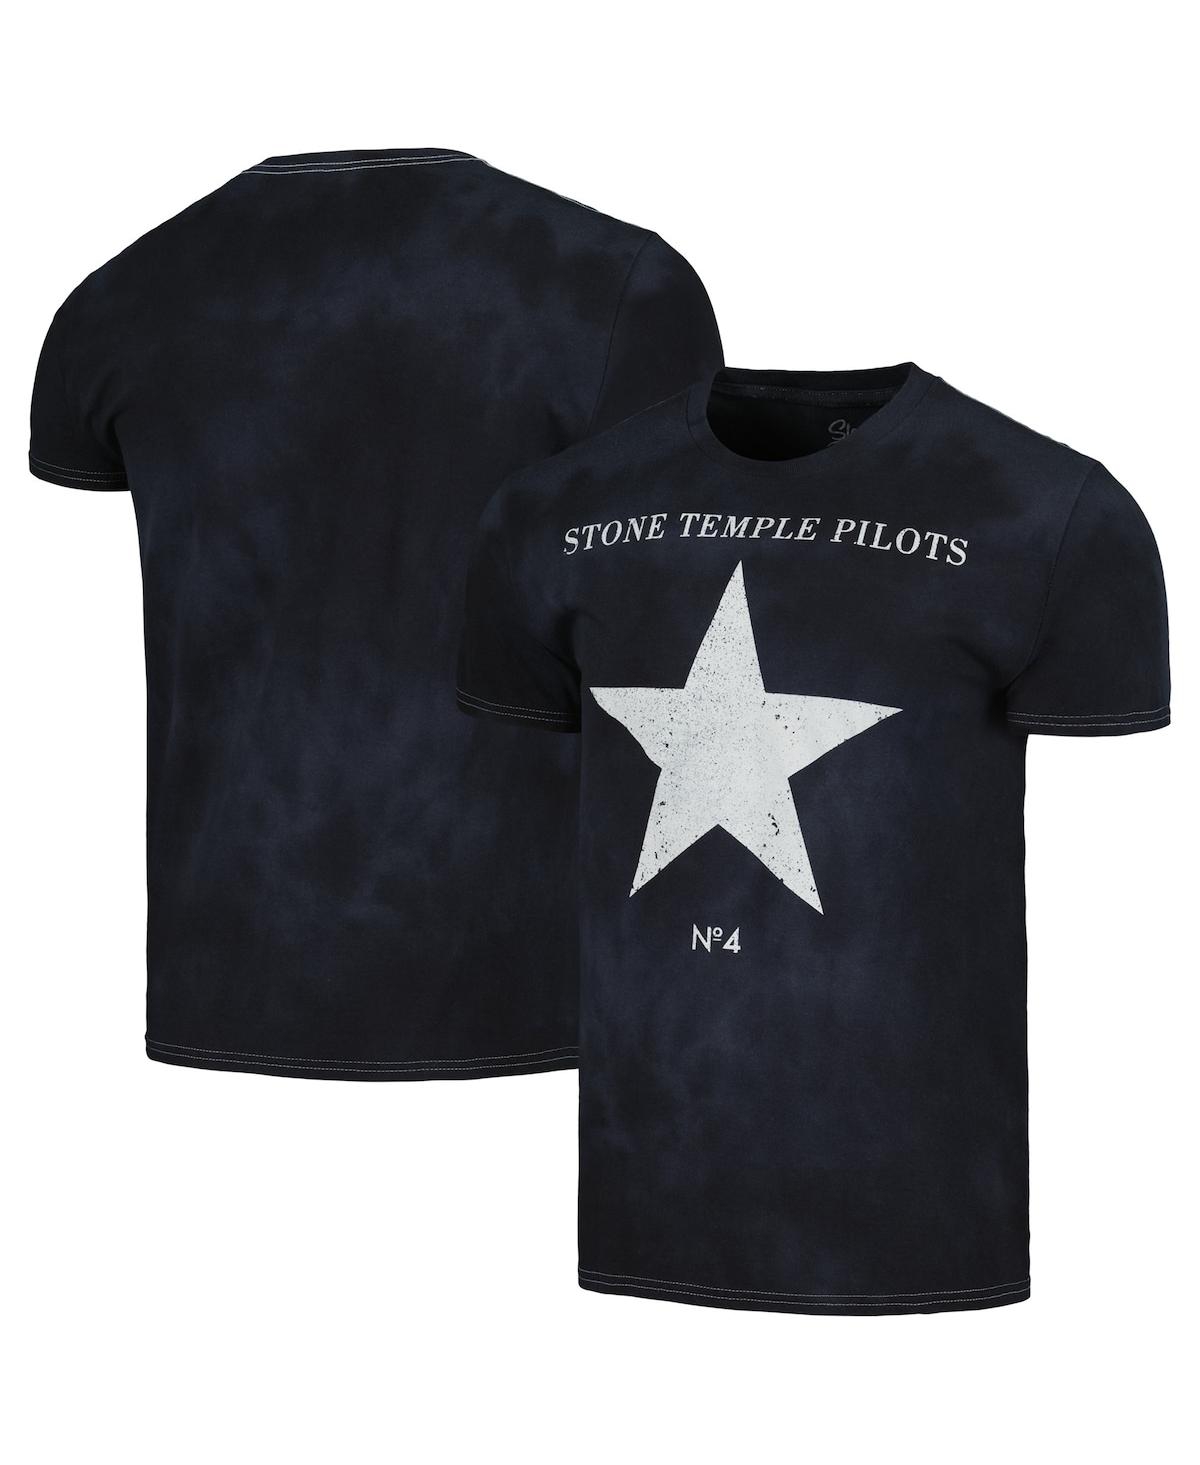 Men's Black Distressed Stone Temple Pilots No. 4 T-shirt - Black